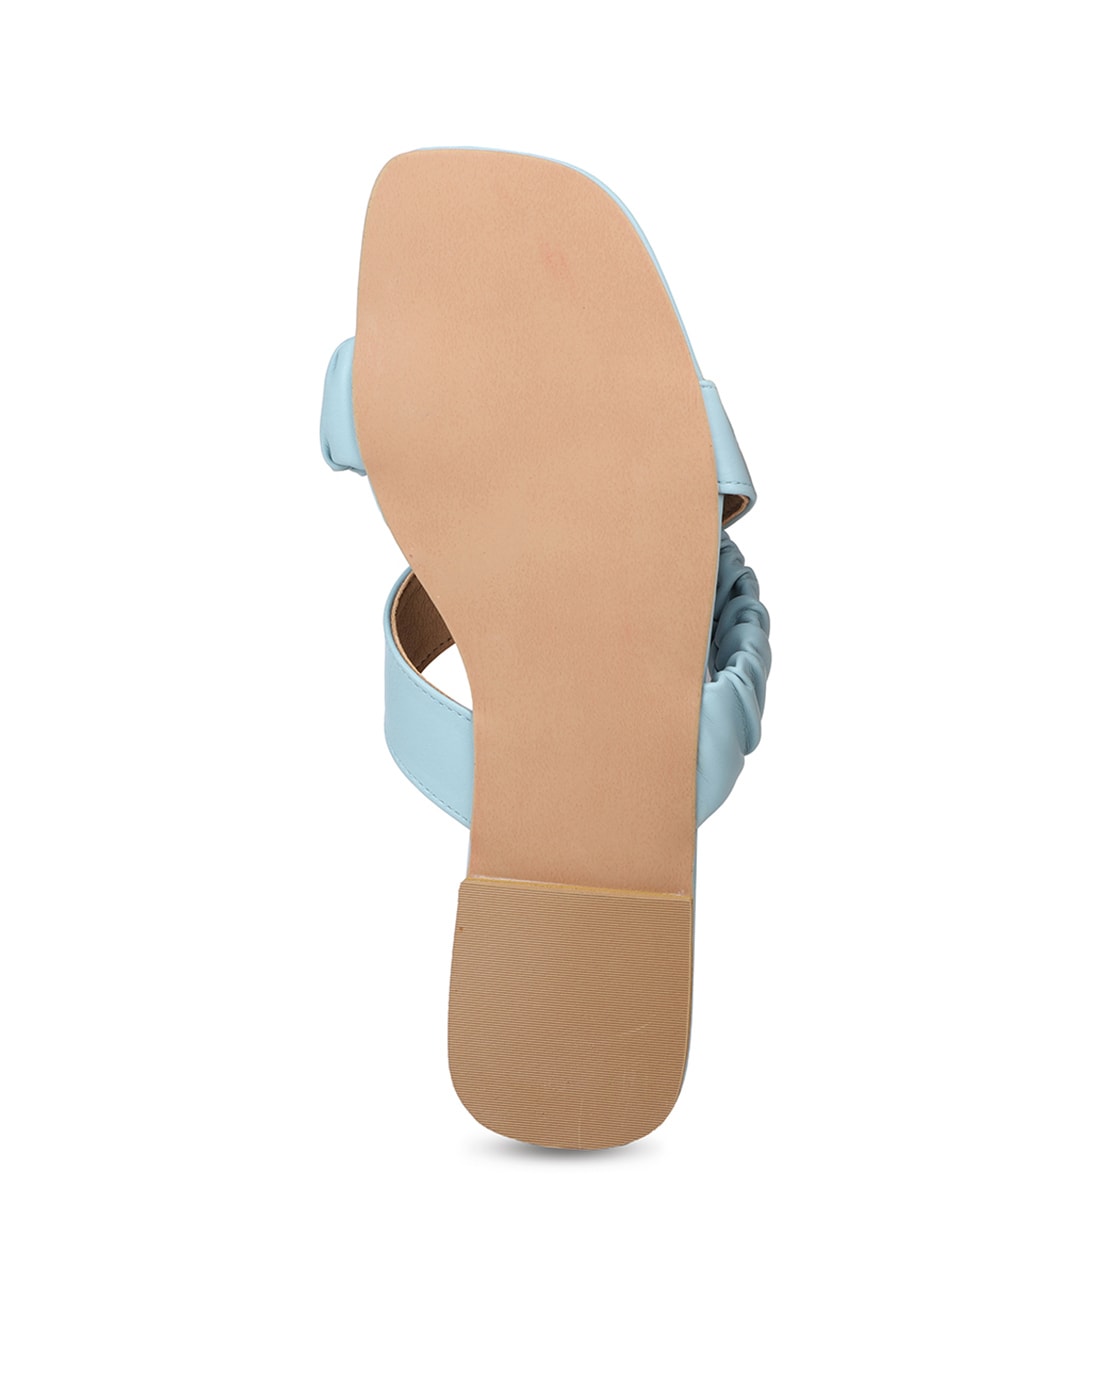 Woman's strap sandal in light blue leather heel 5